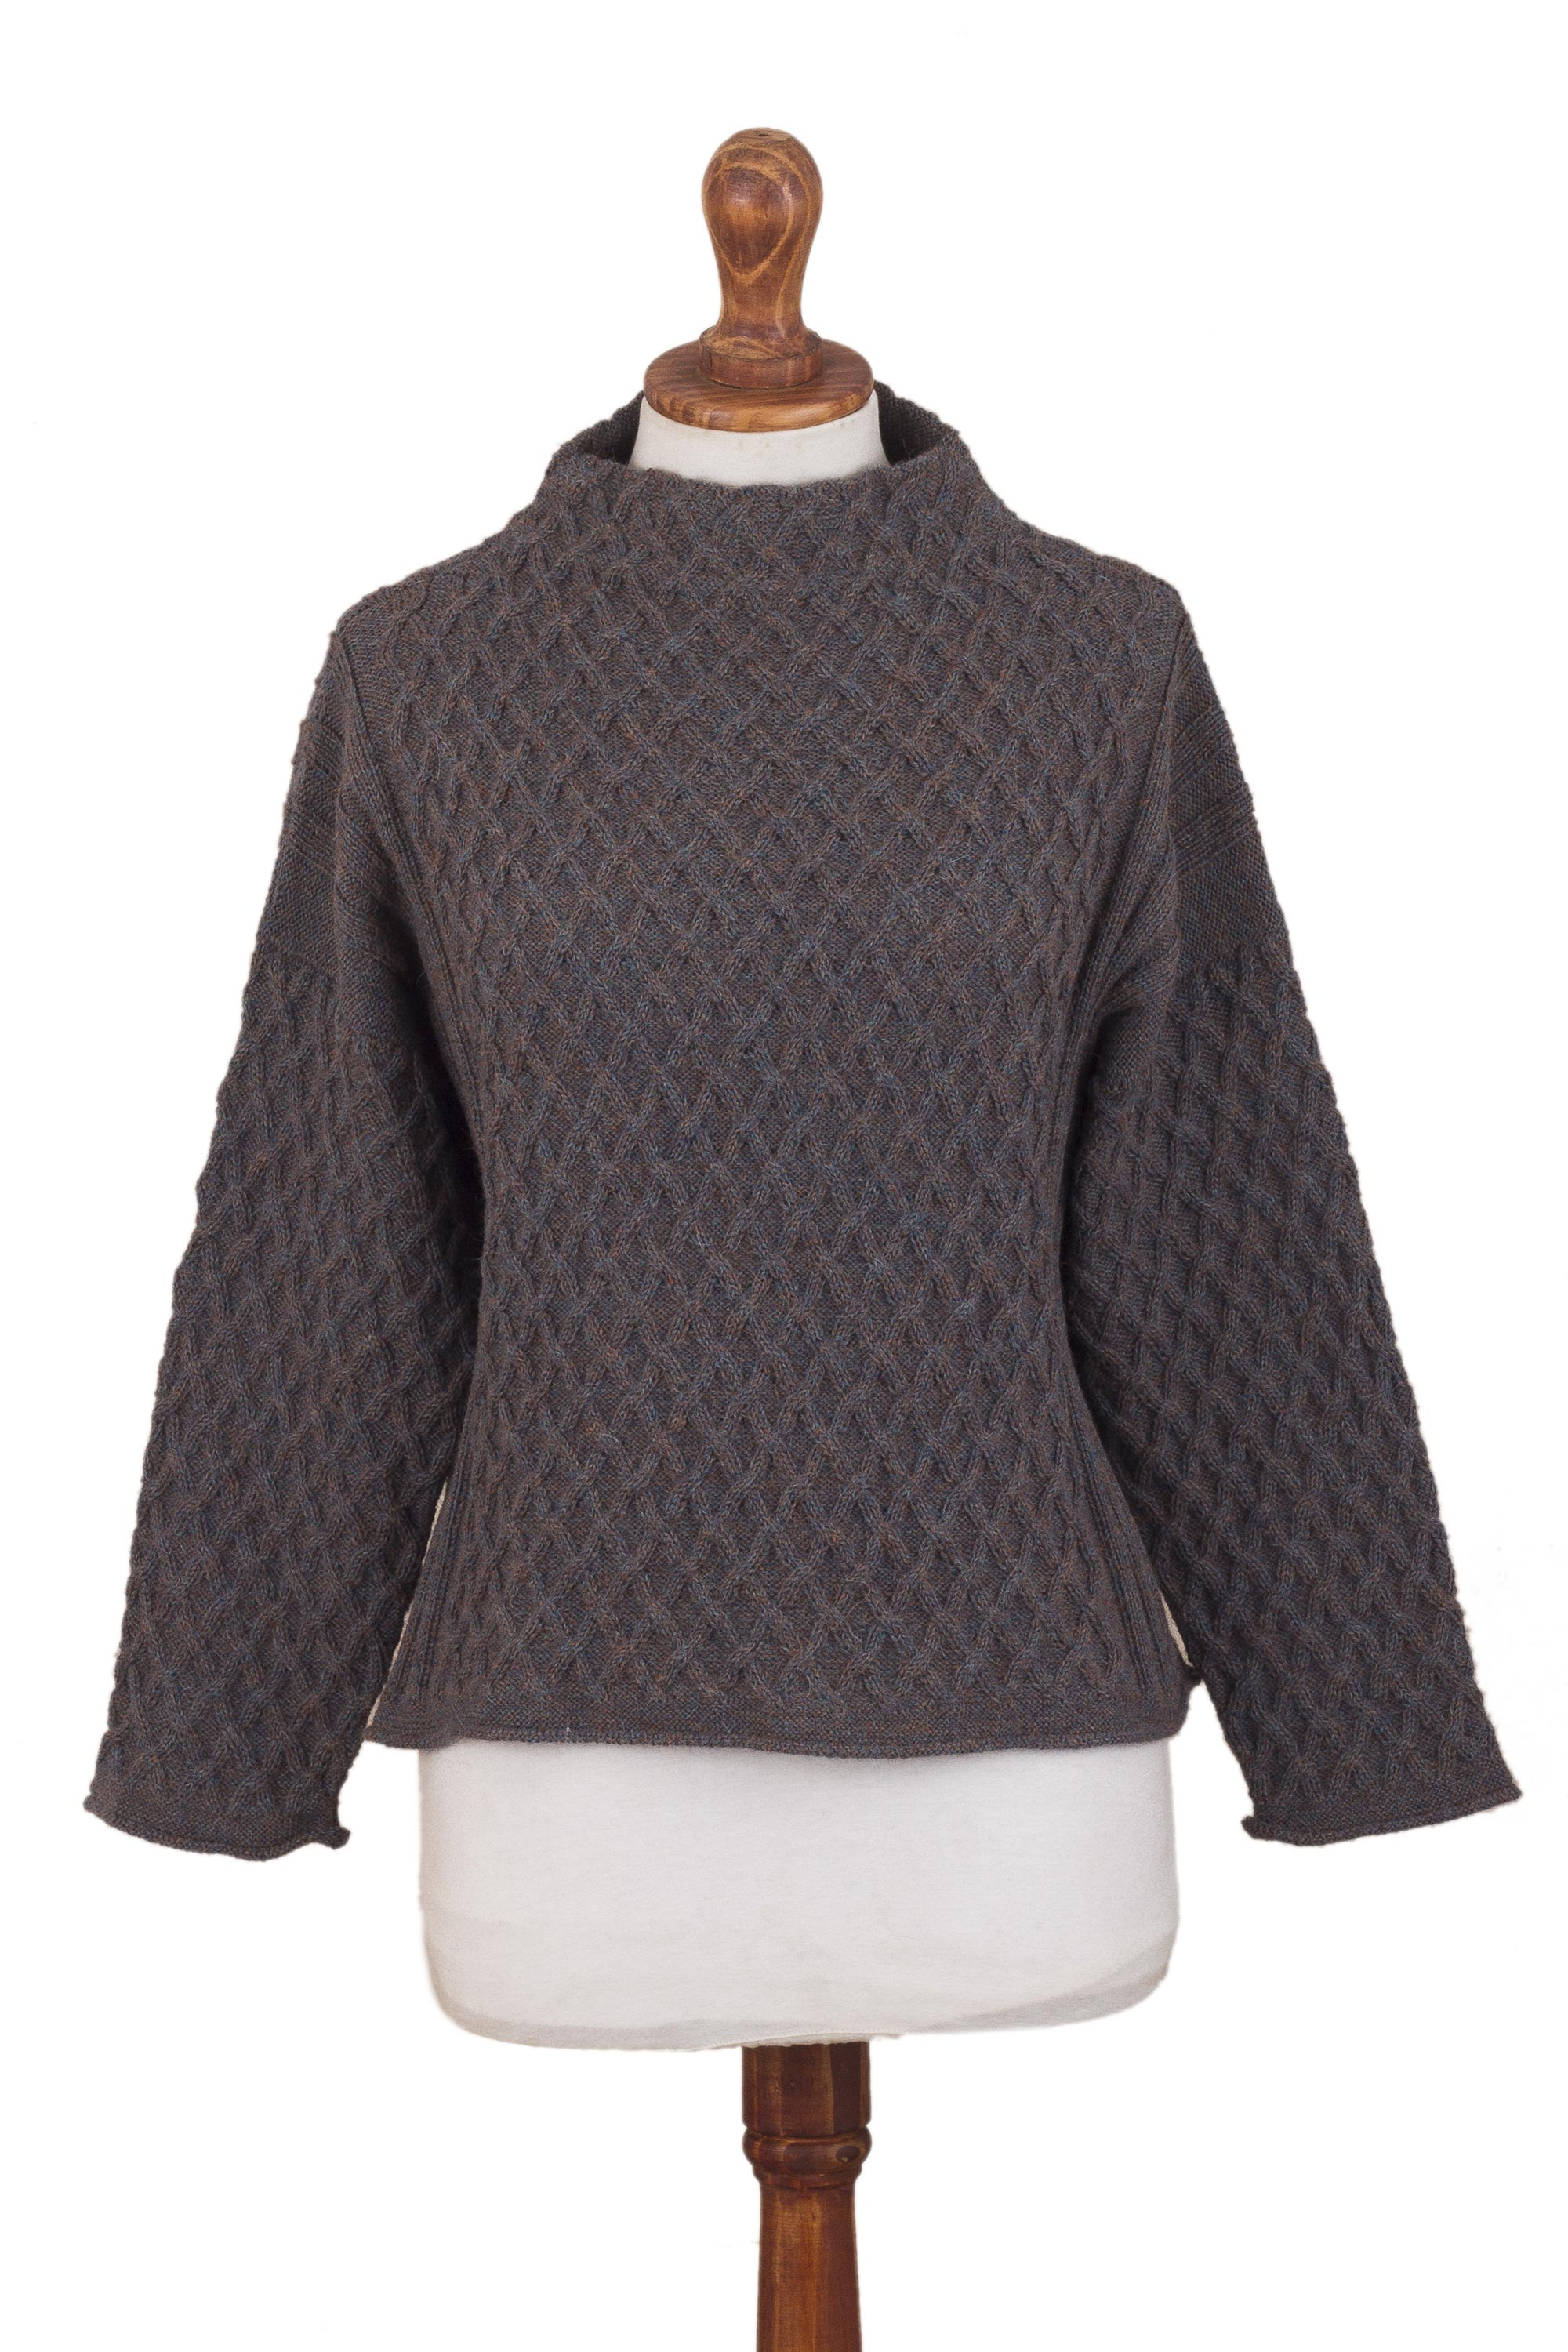 UNICEF Market | Trellis Pattern Grey 100% Alpaca Sweater - Smoky Grey ...